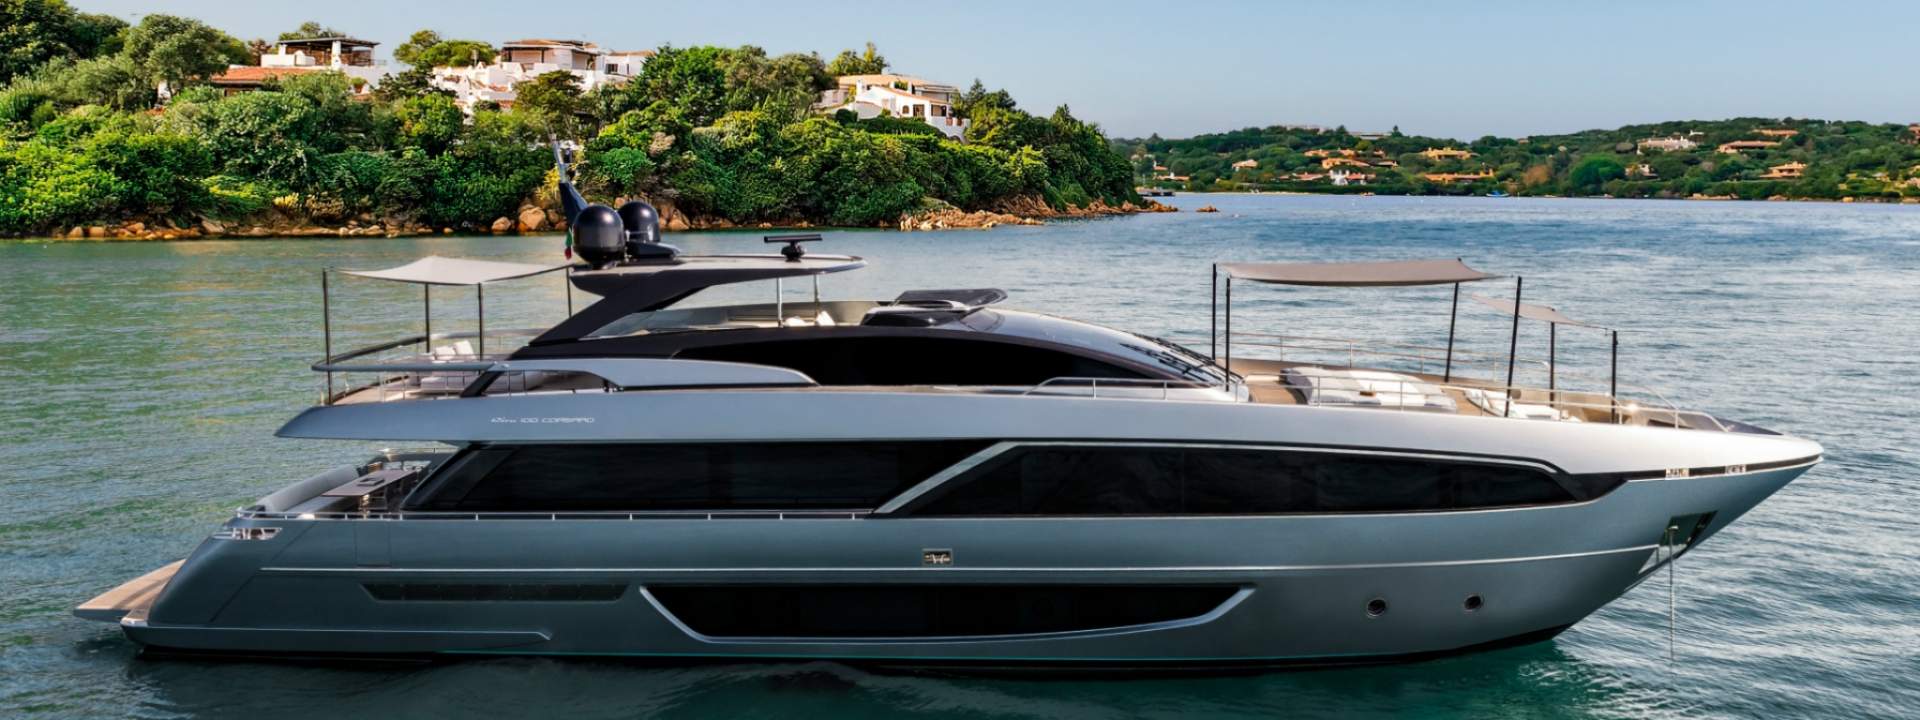 Yacht Riva 100 Corsaro